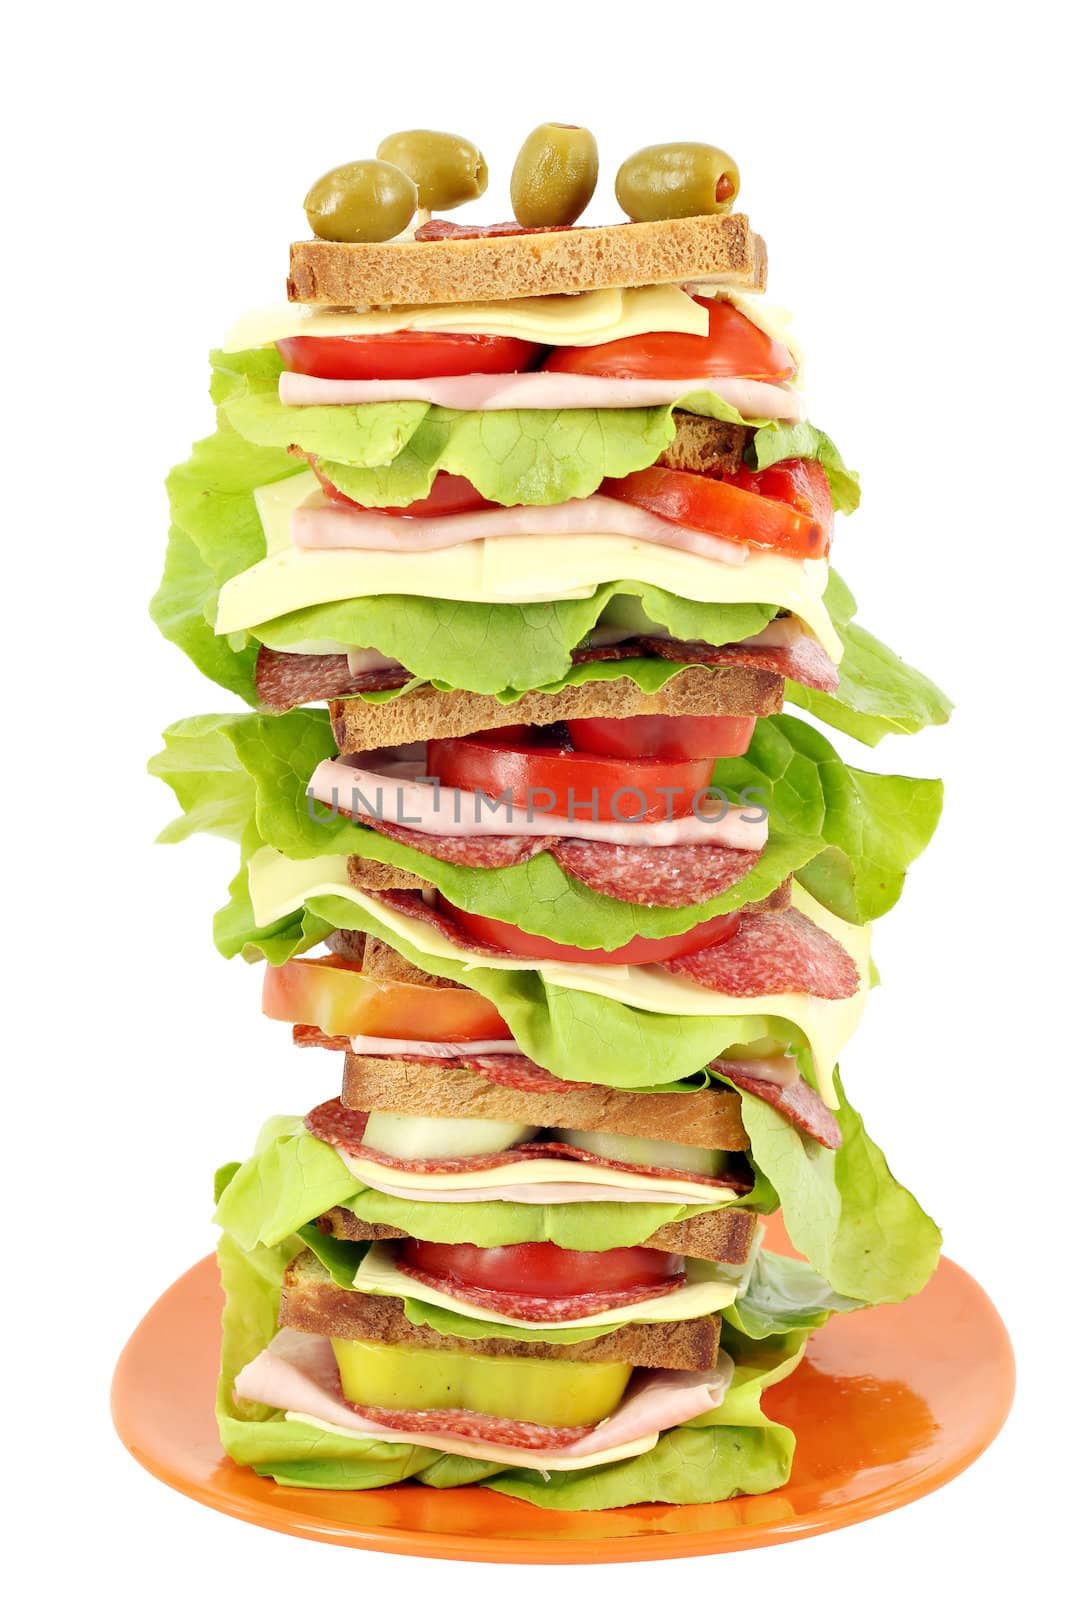 tall sandwich on white background 